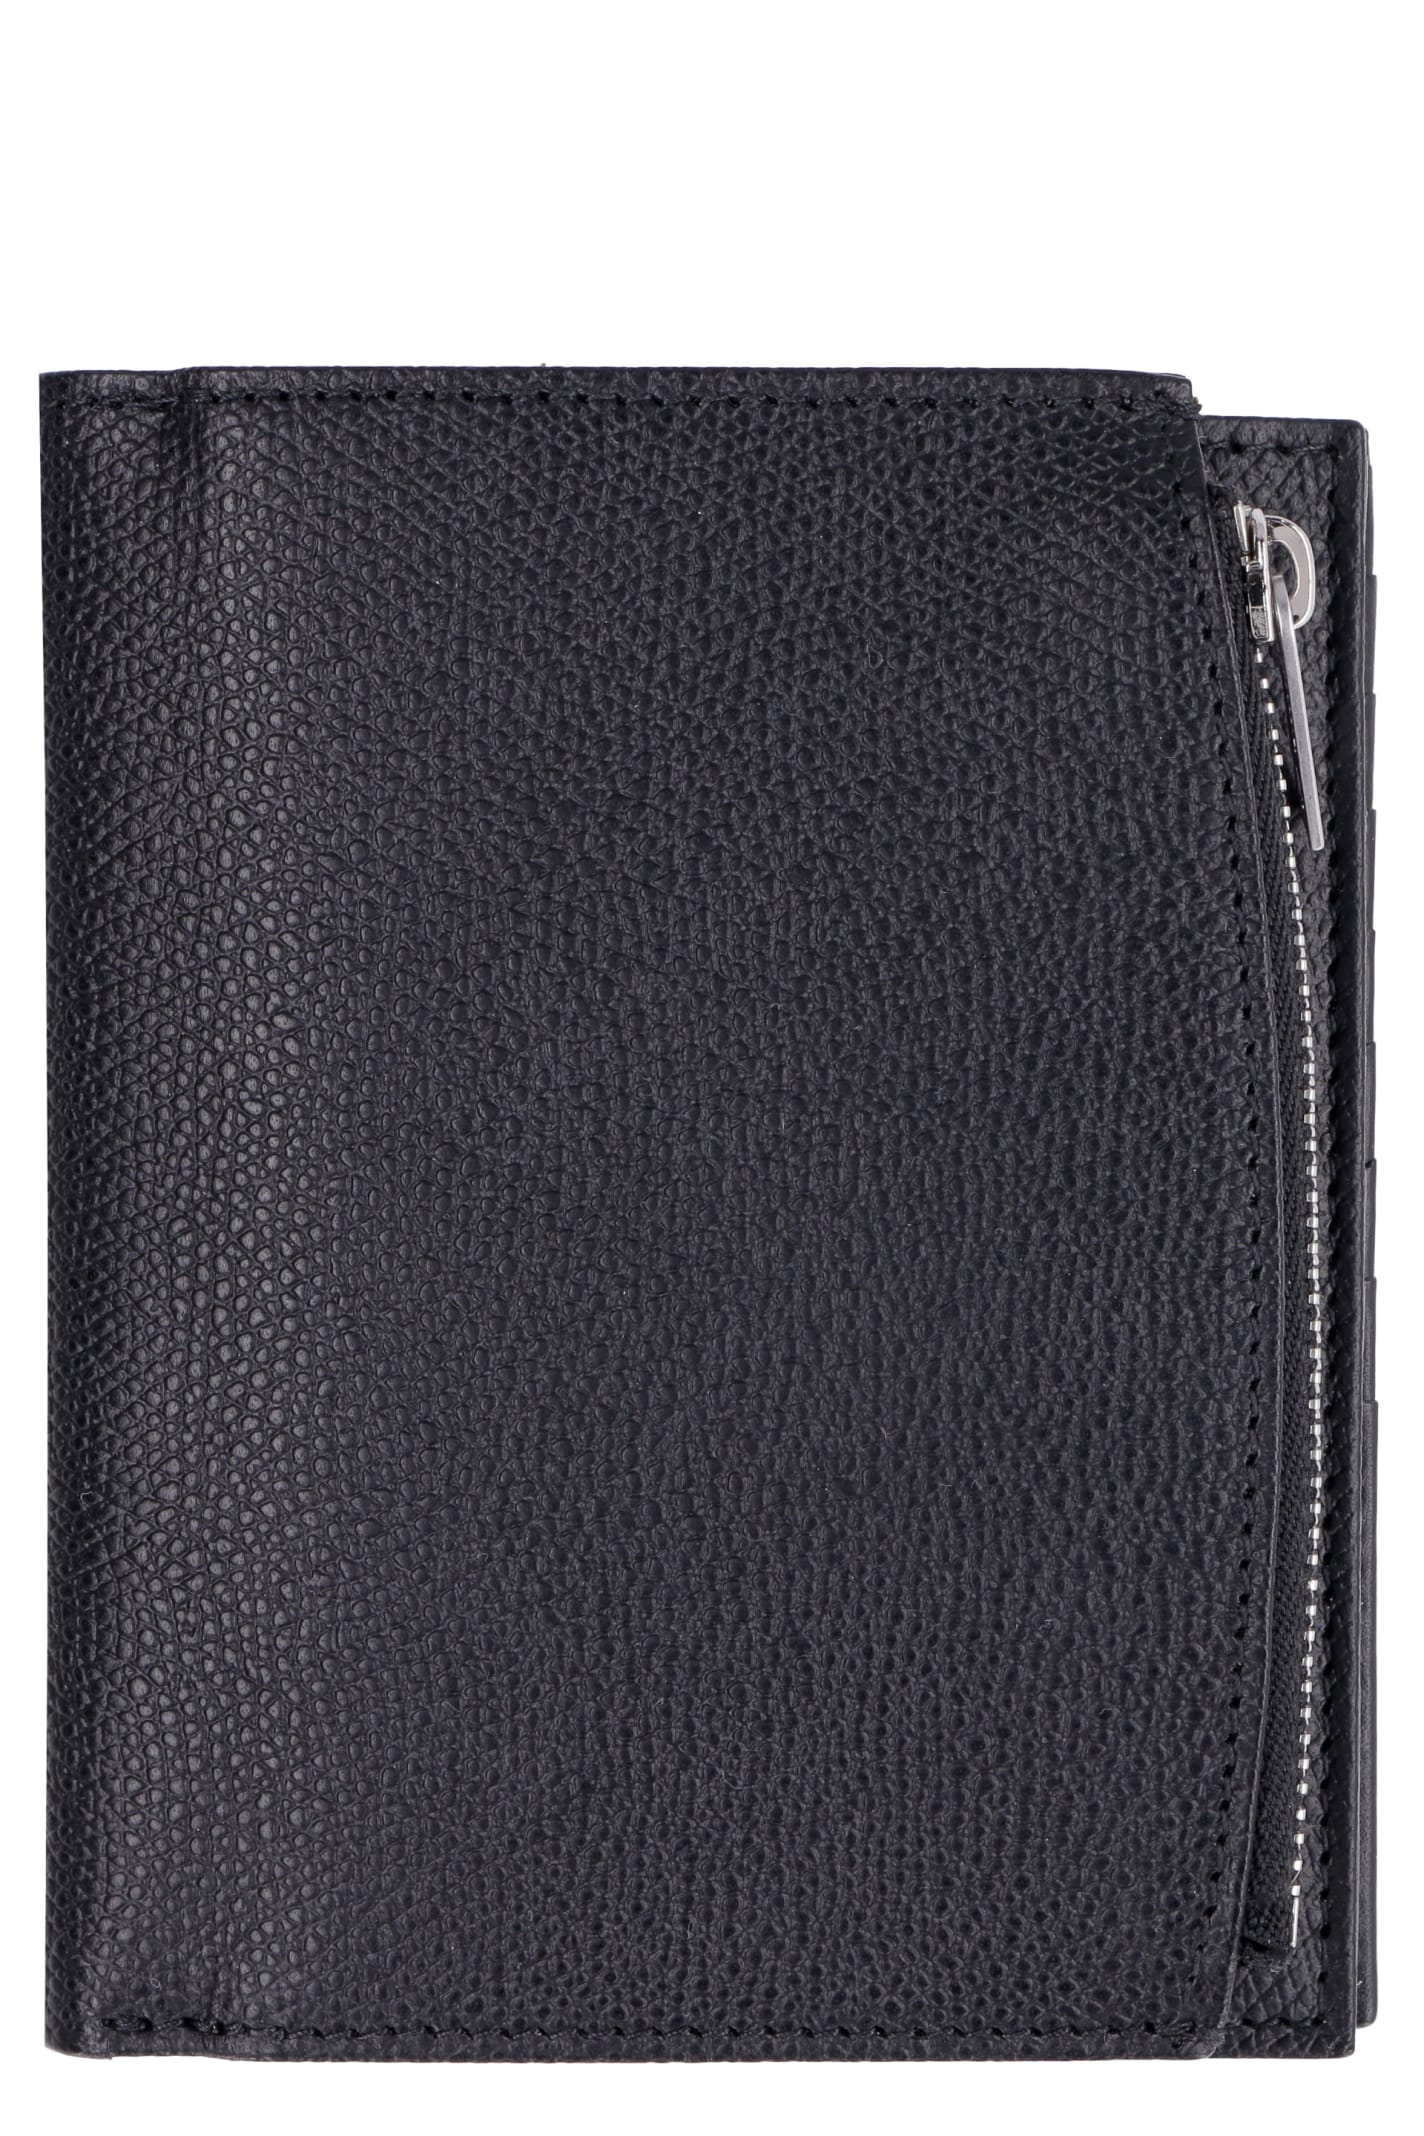 Maison Margiela Leather Flap-over Wallet